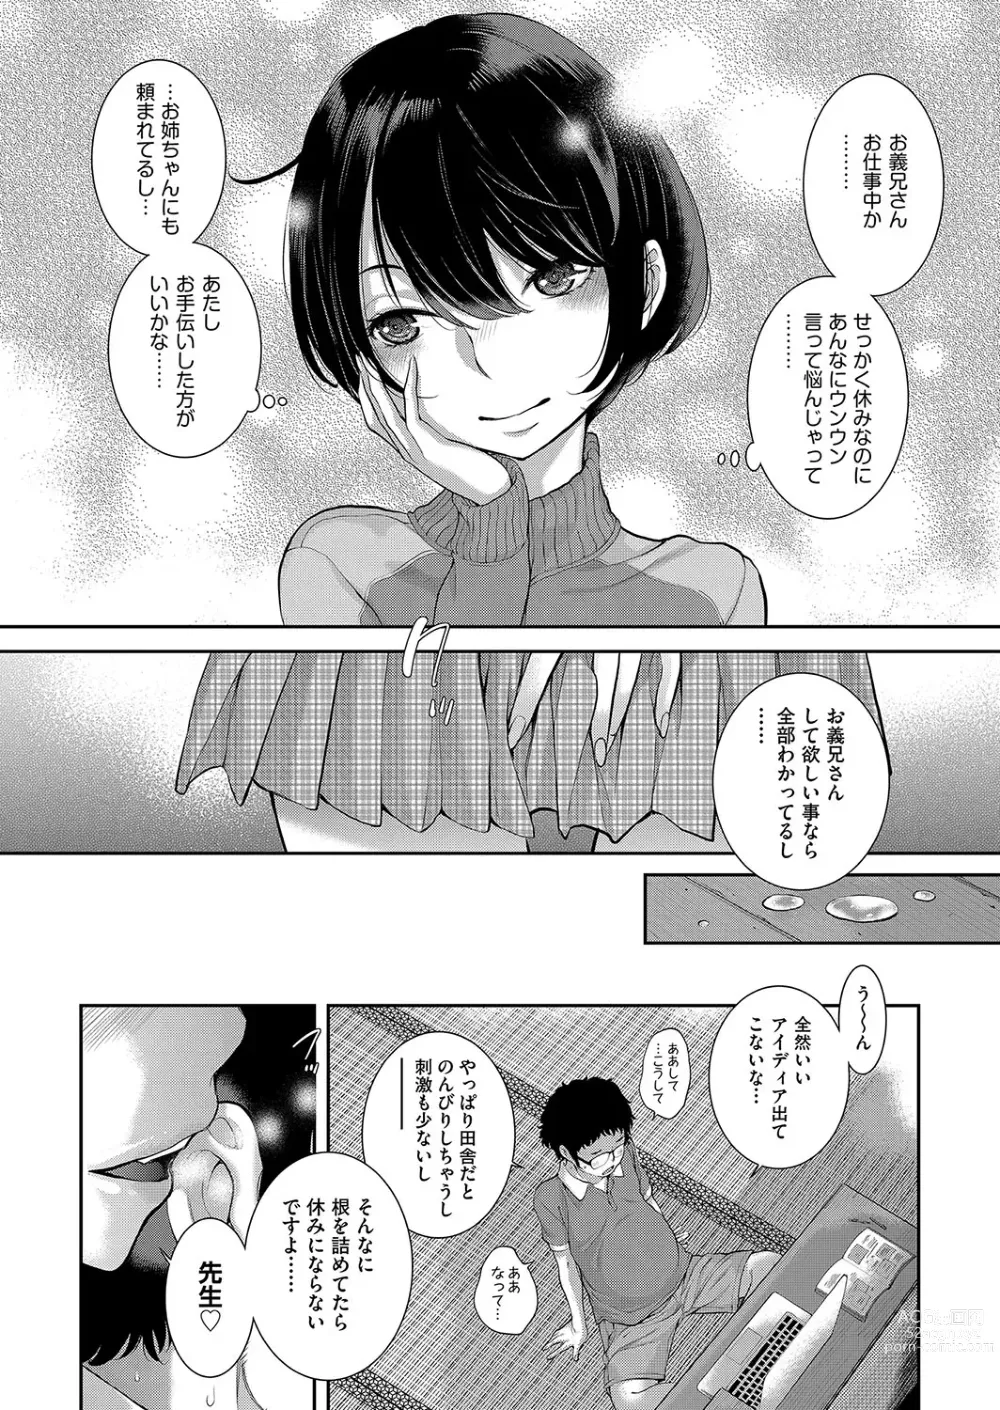 Page 13 of manga Maid Kitan - Maid Misteryous Story